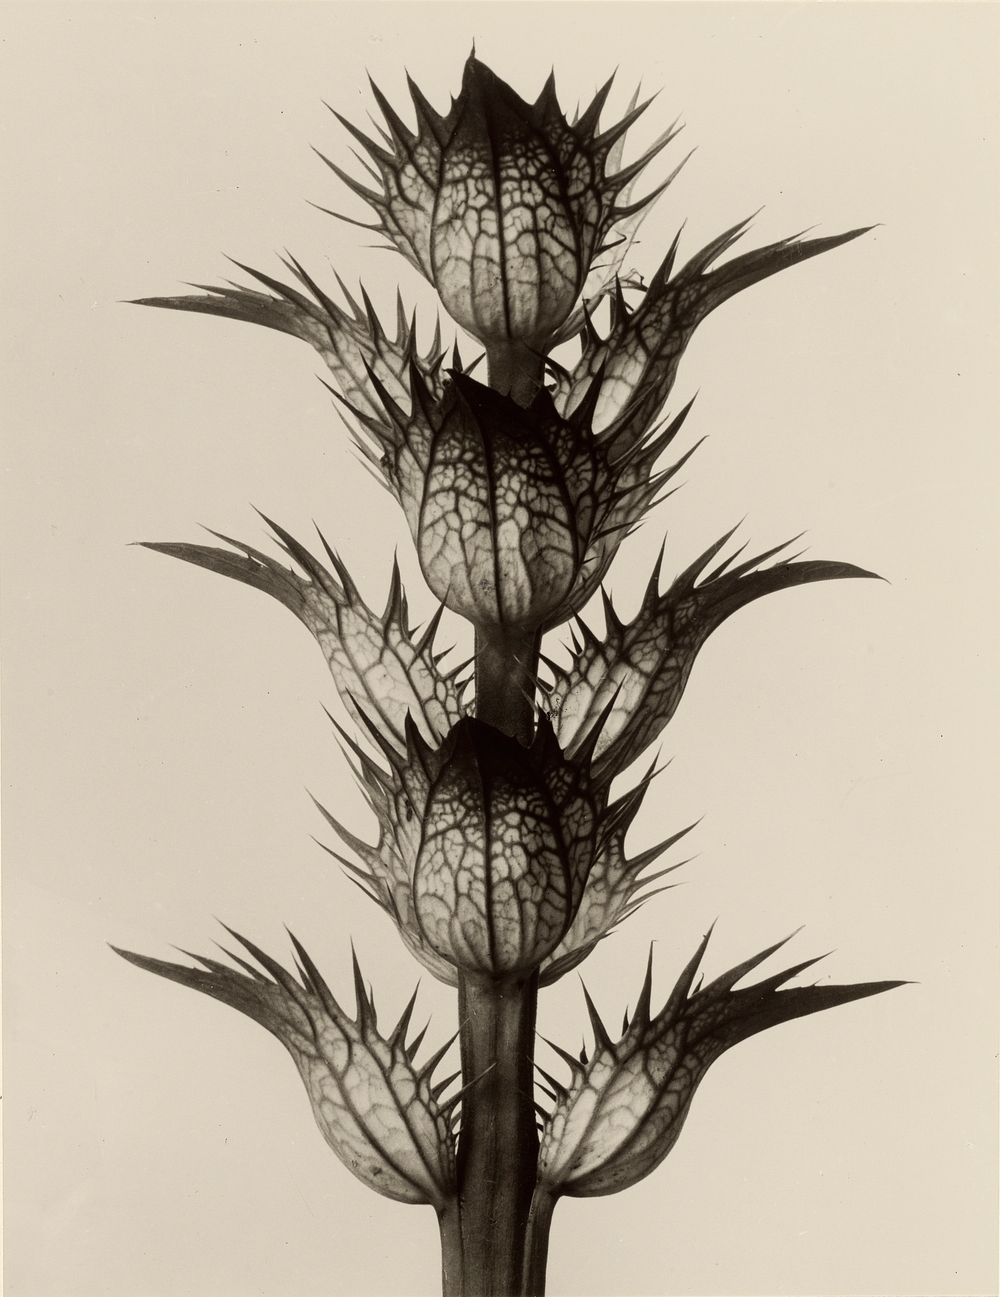 Acanthus mollis by Karl Blossfeldt (1865-1932)